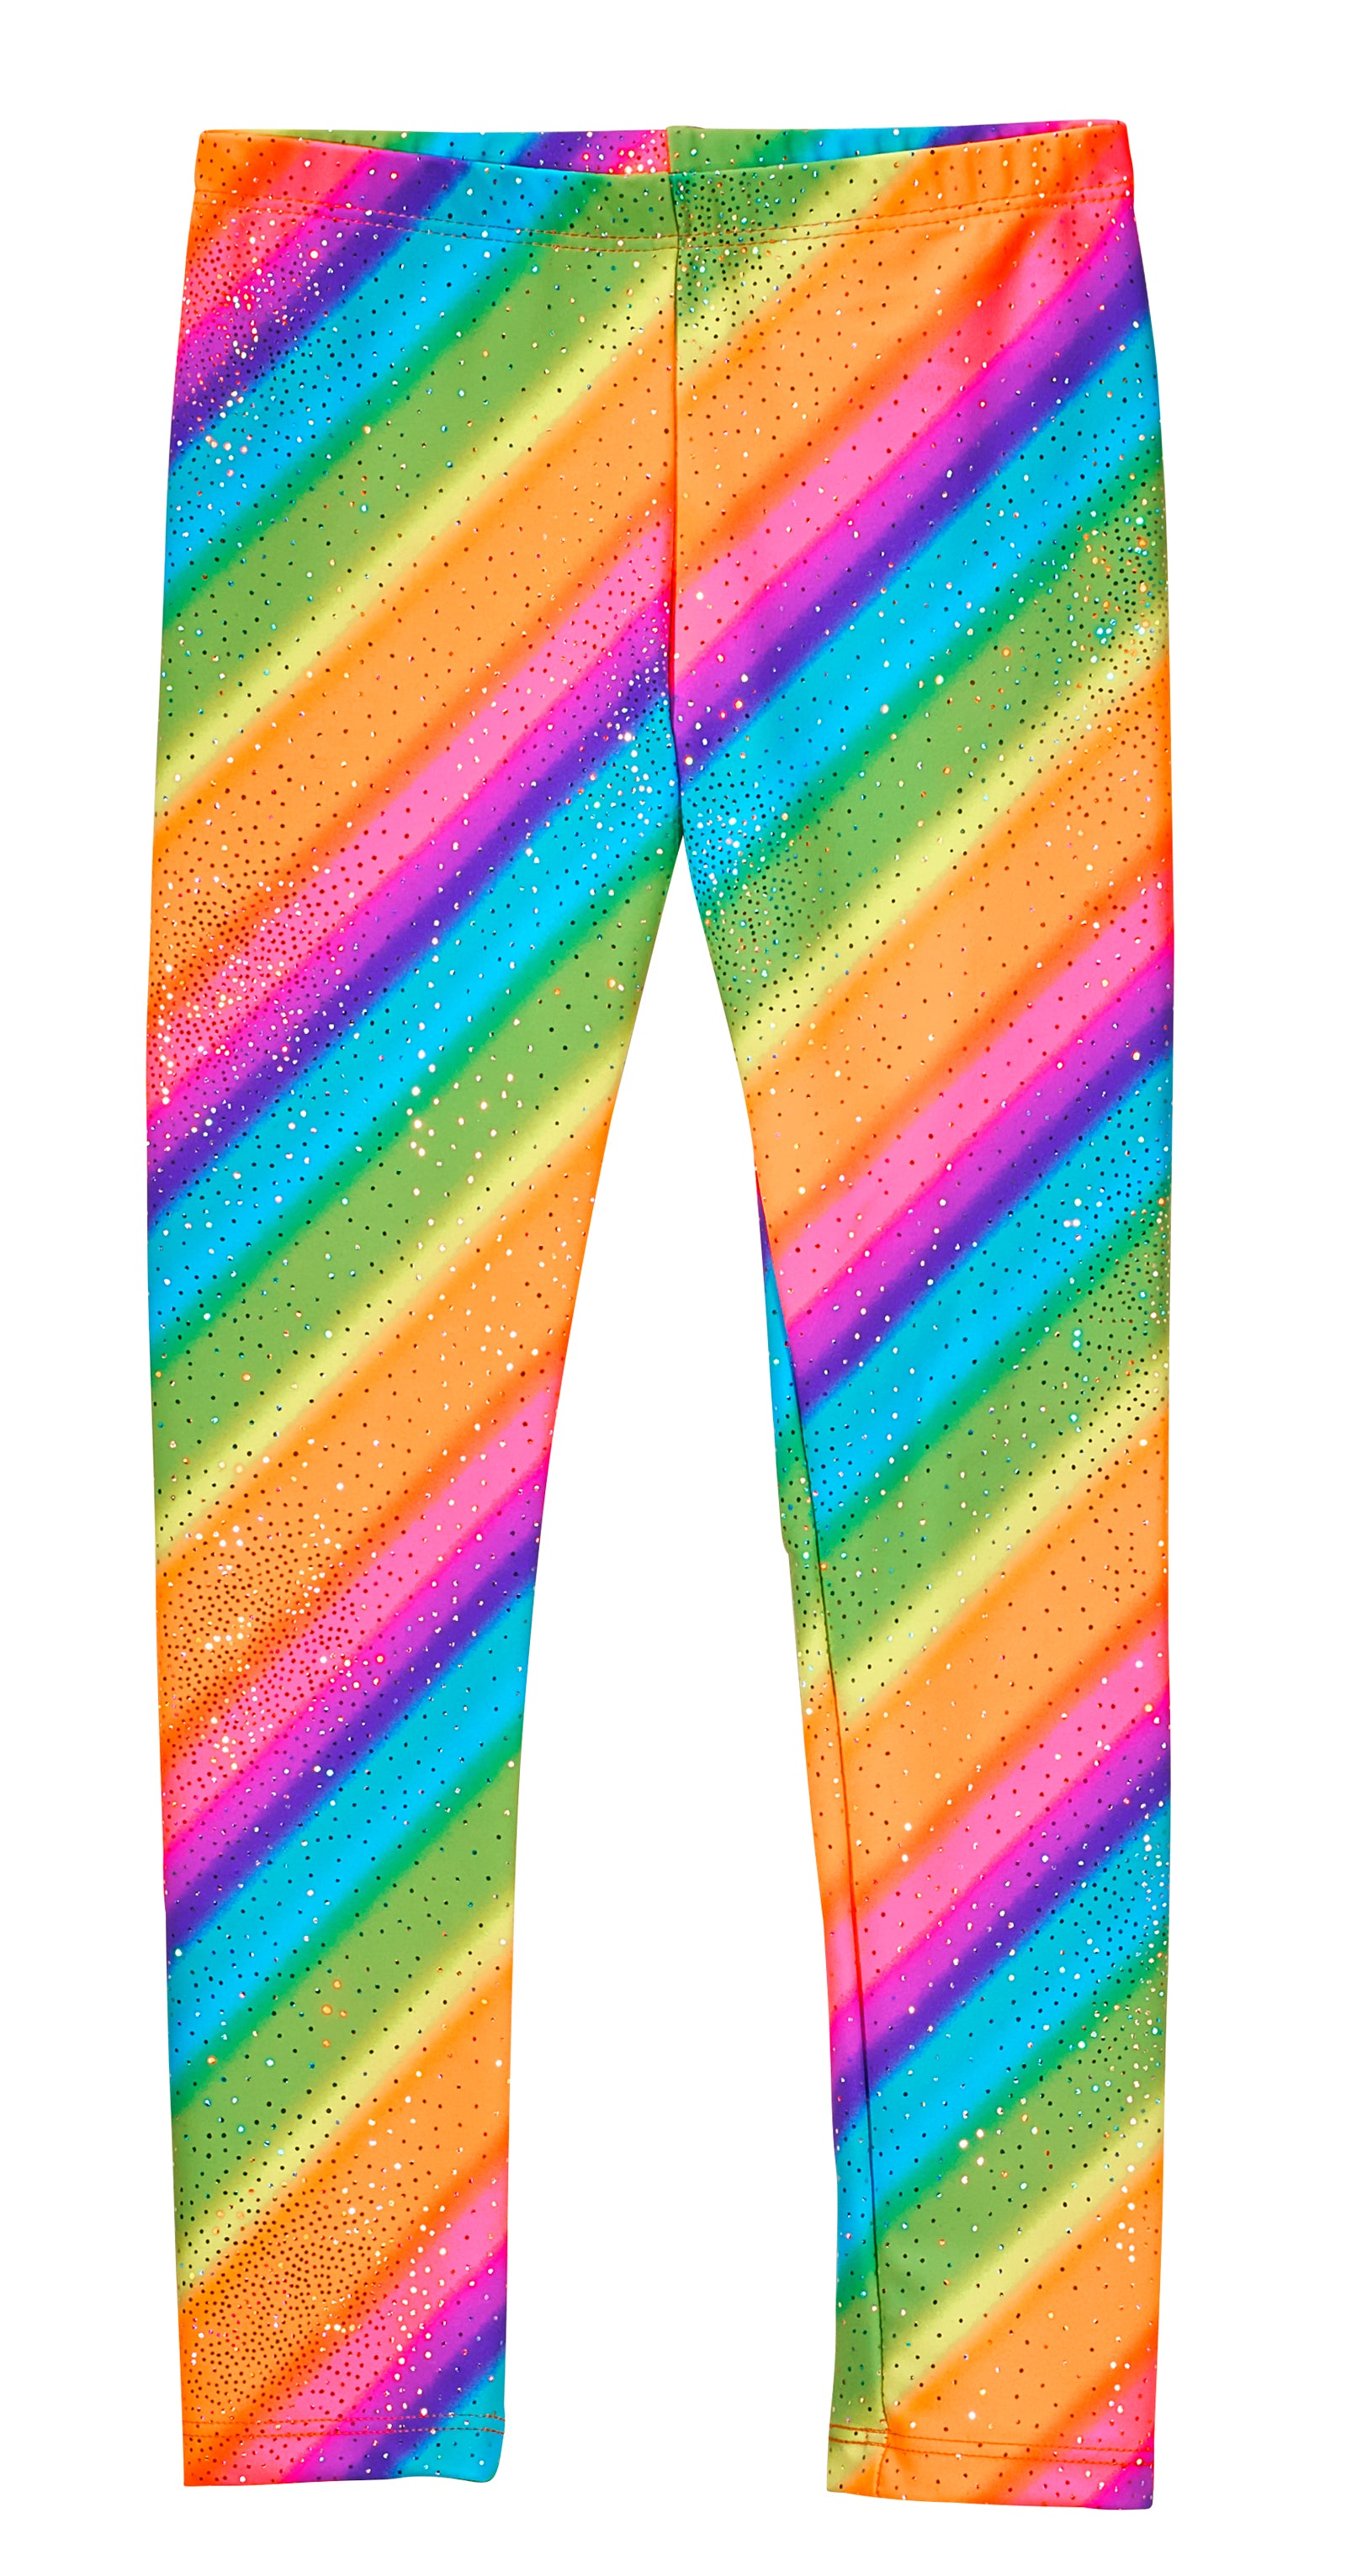  Girls' Leggings Girls Stretch Leggings Rainbow Tie Dye